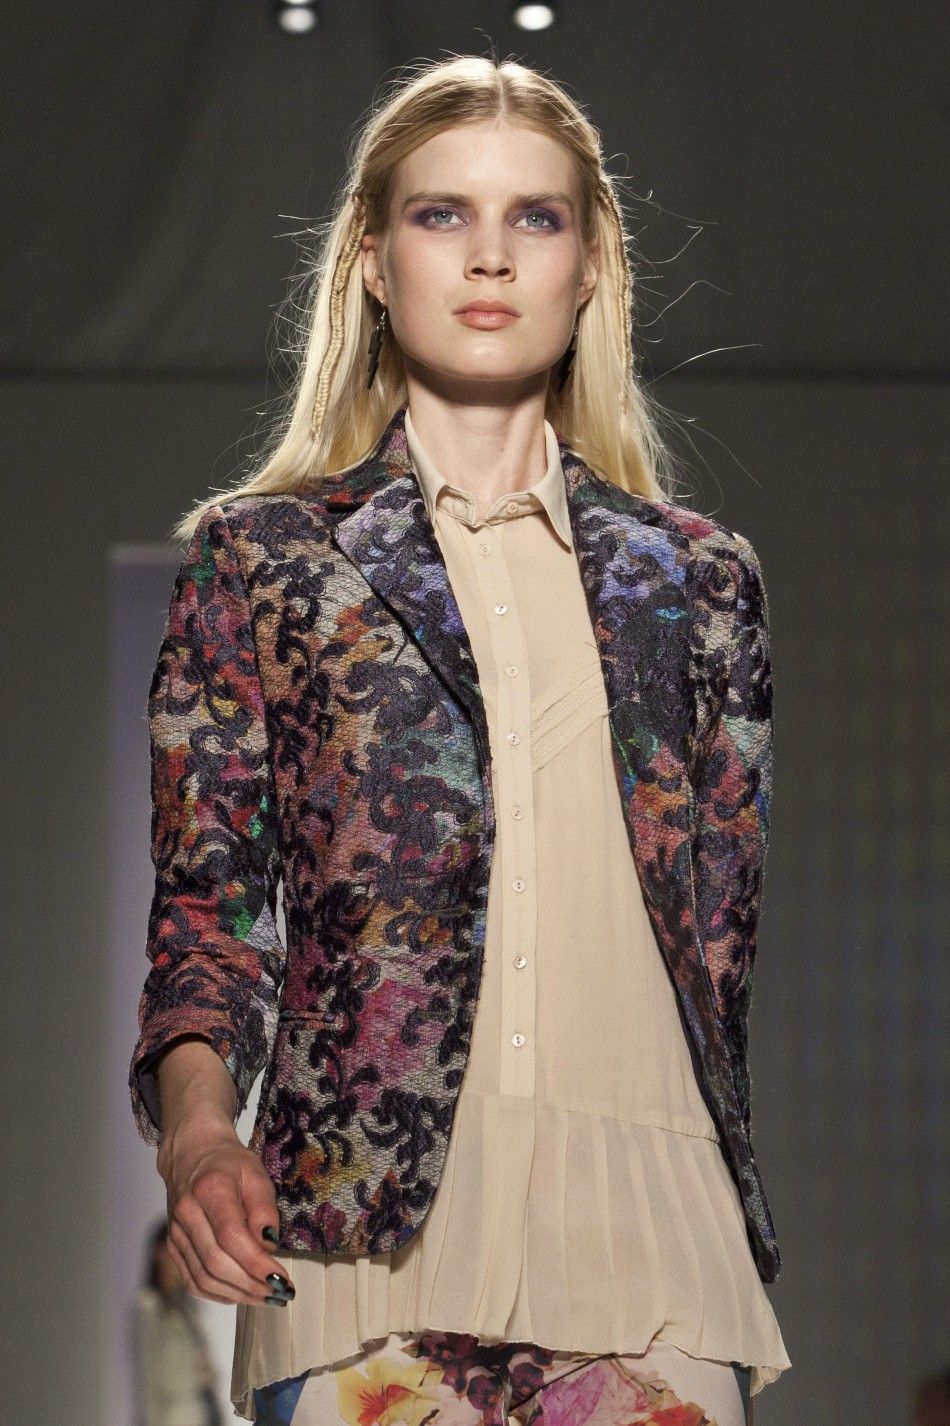 Nicole Miller Spring 2013 at Mercedes-Benz Fashion Week in New York, Sept. 7, 2012.